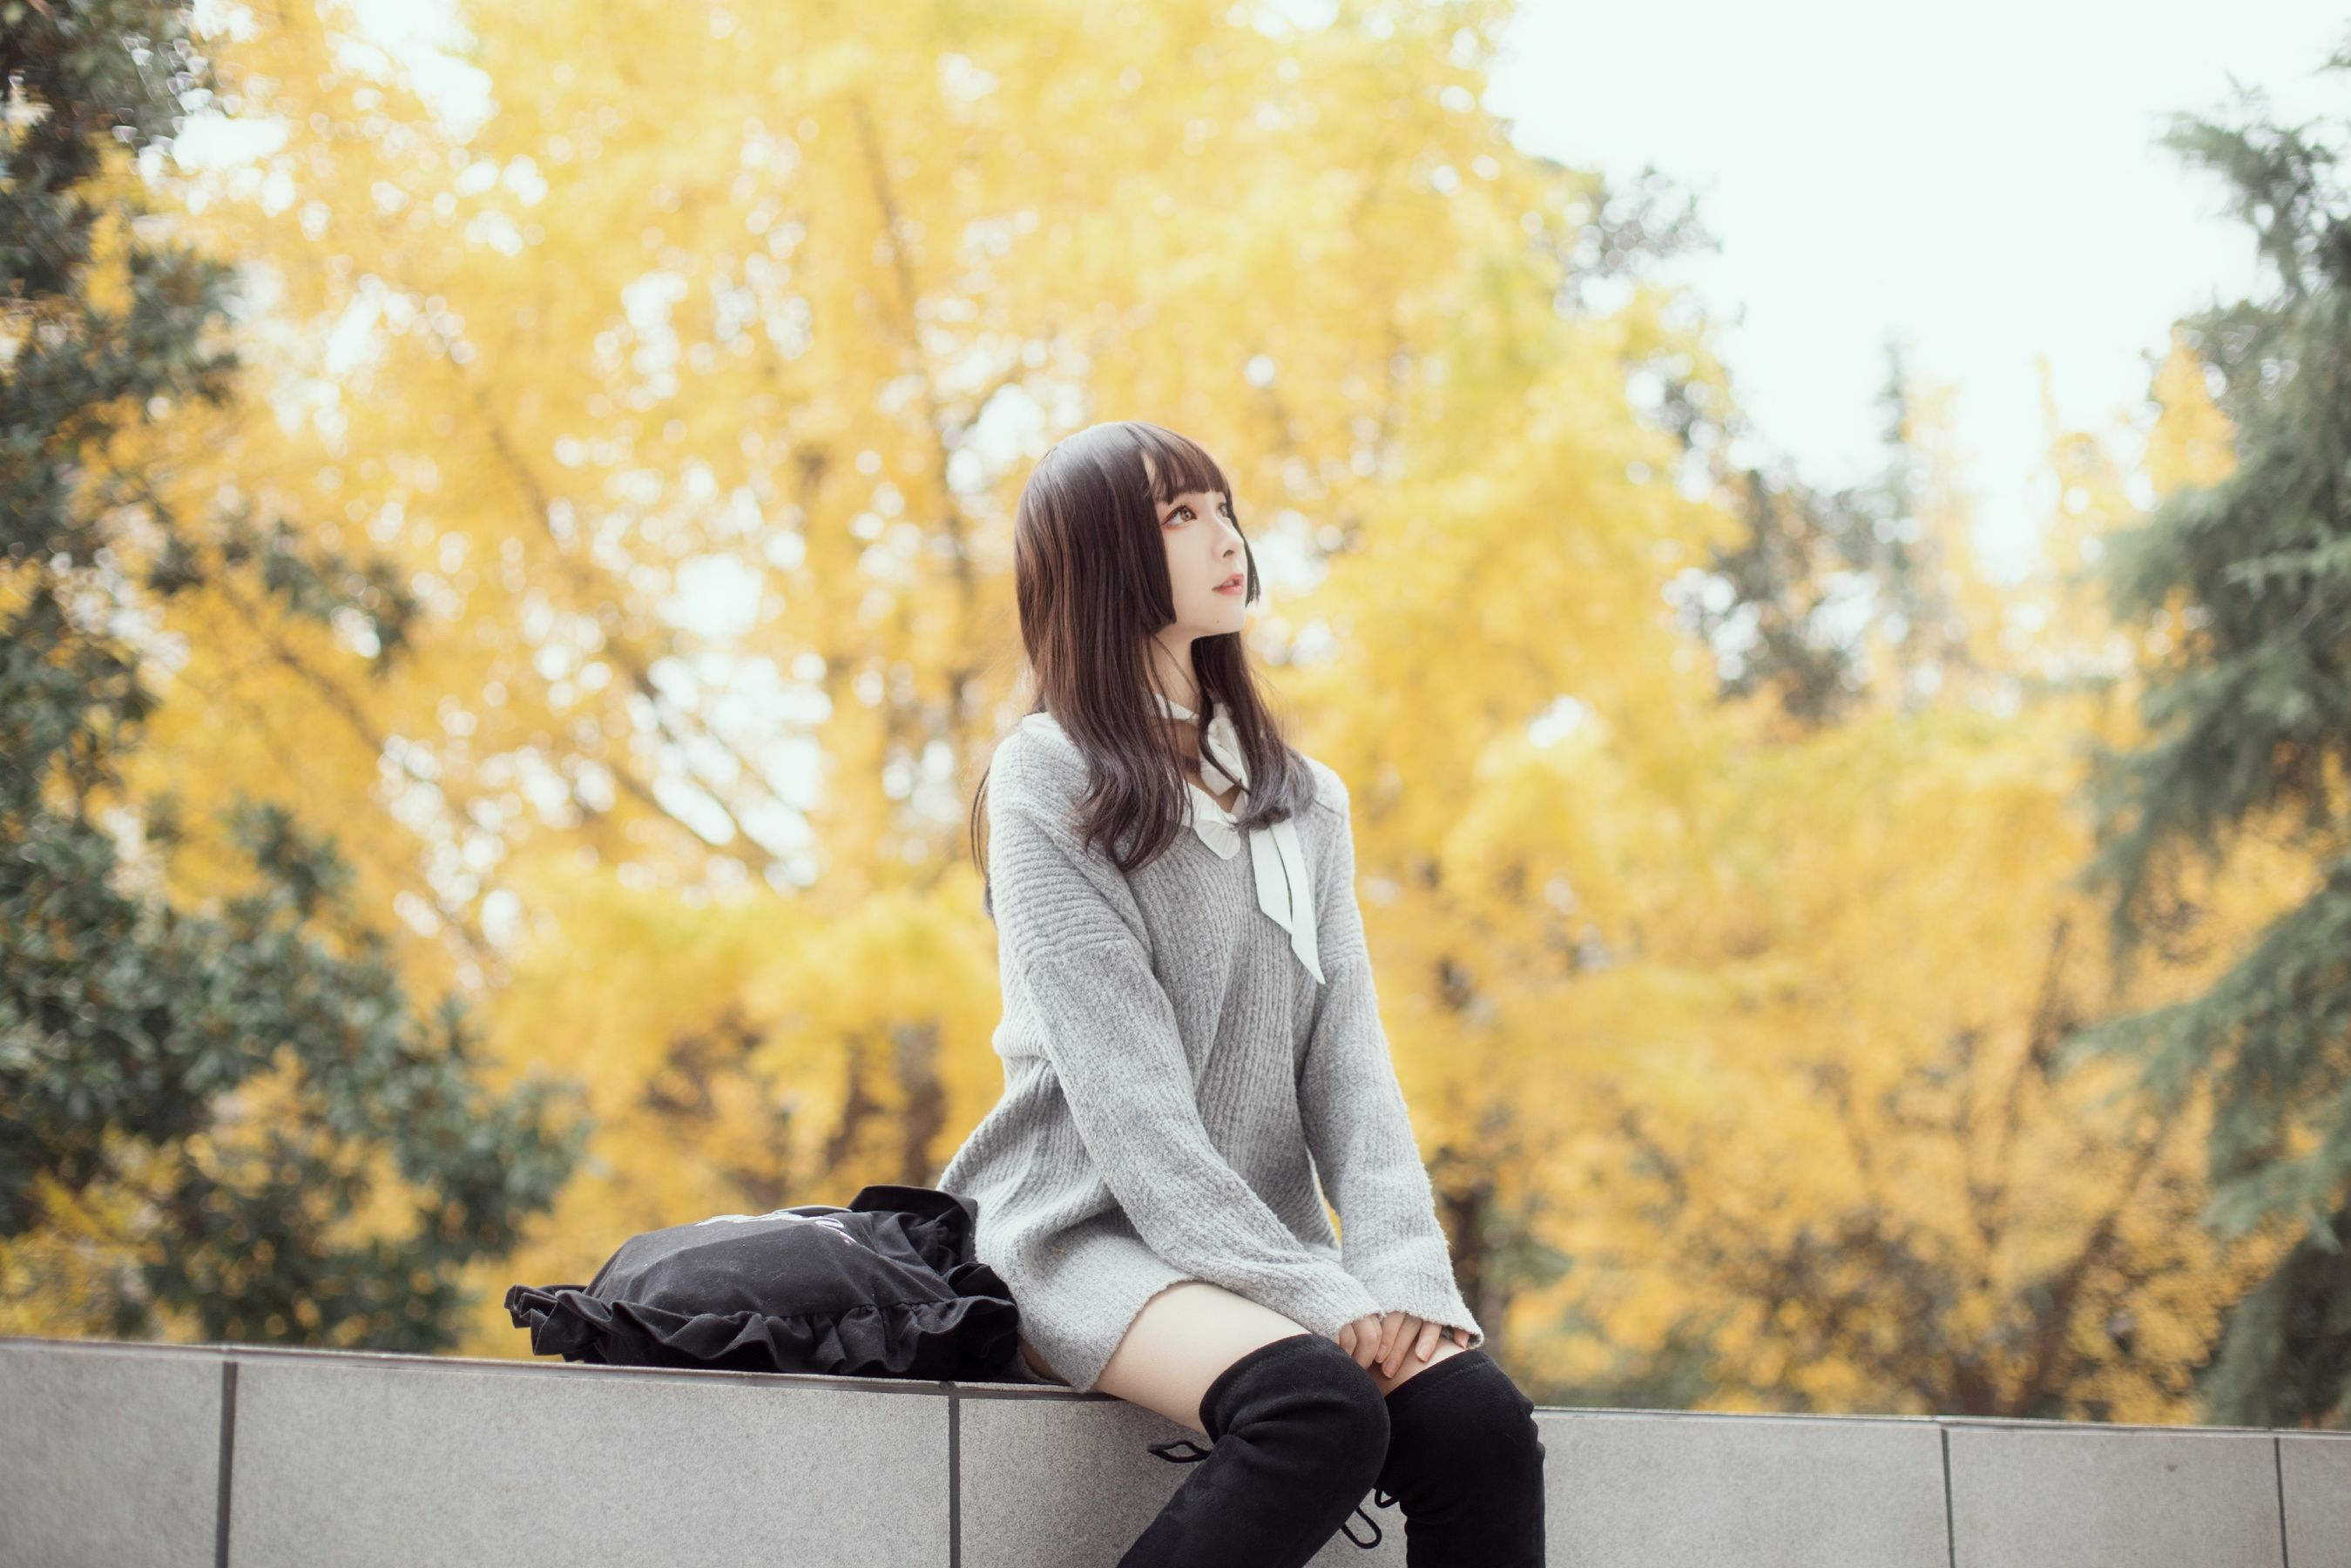 [Cosplay写真] 二次元美女古川kagura - 银杏树下  第15张